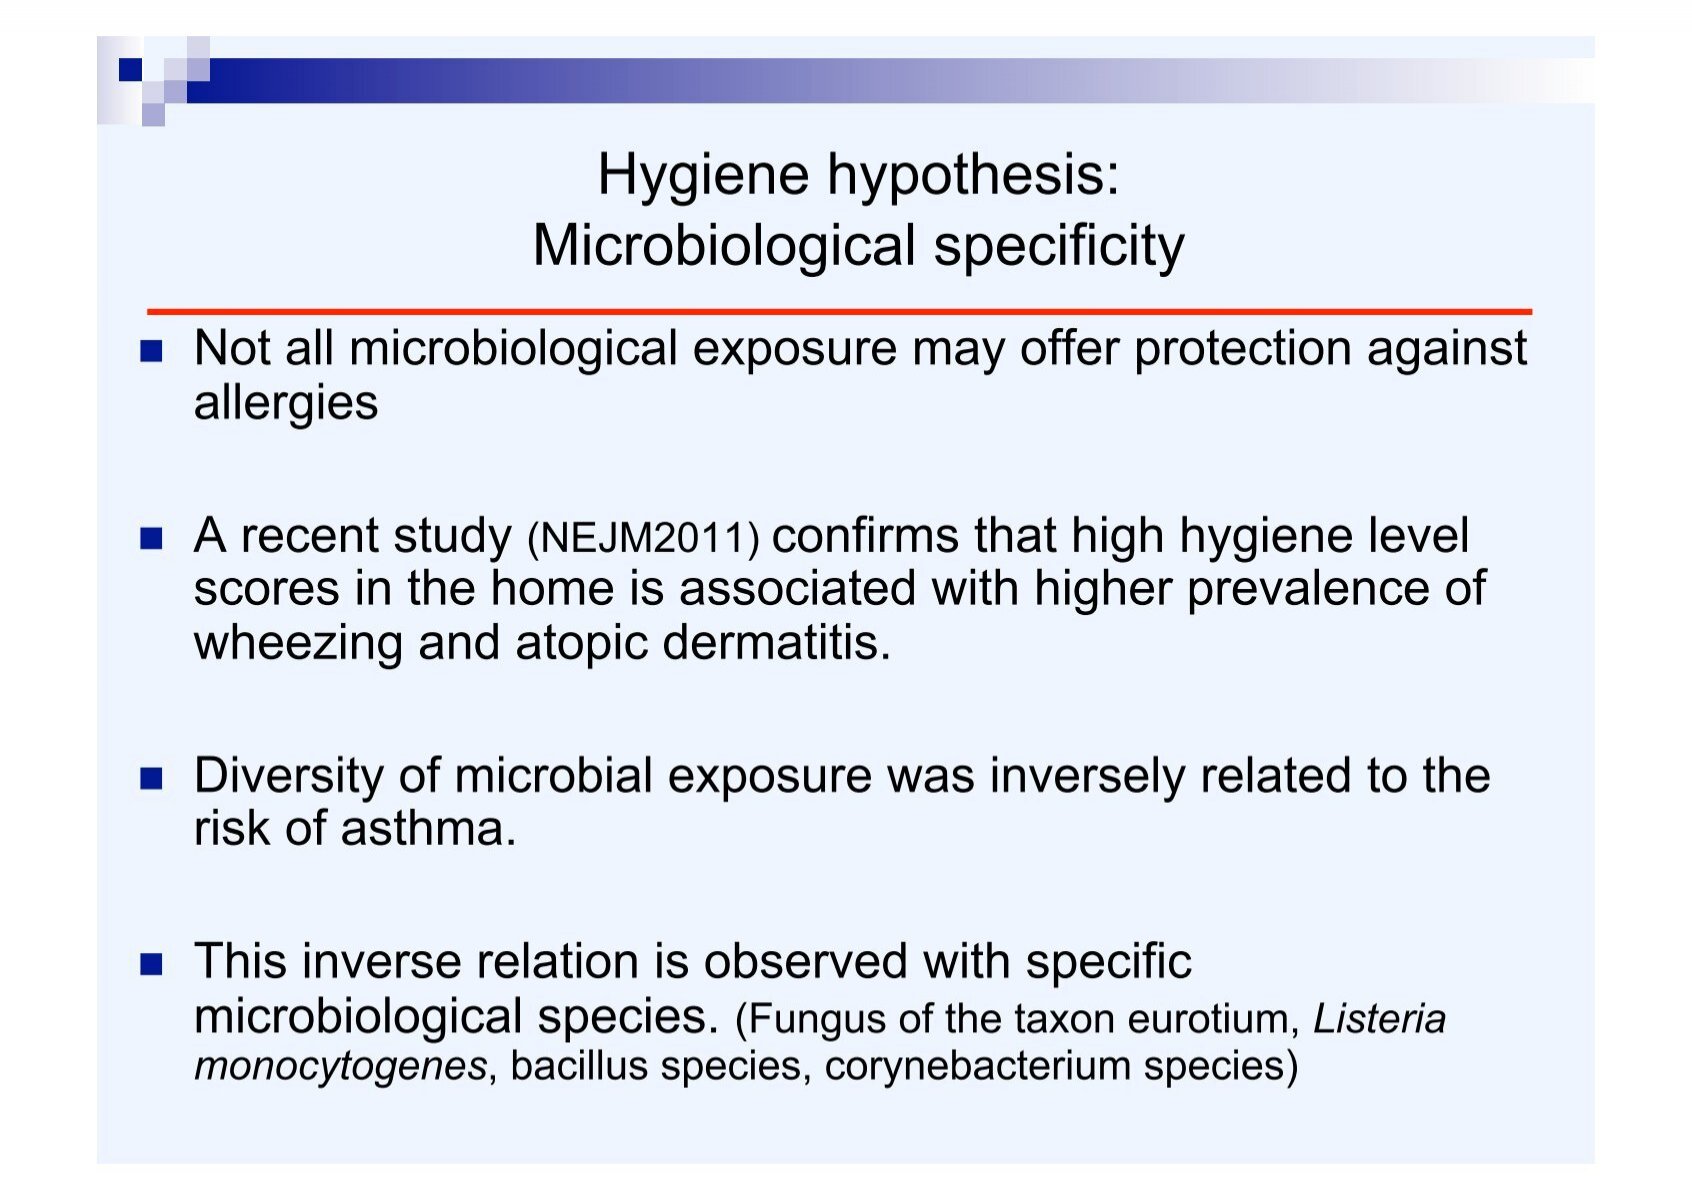 the hygiene hypothesis states quizlet